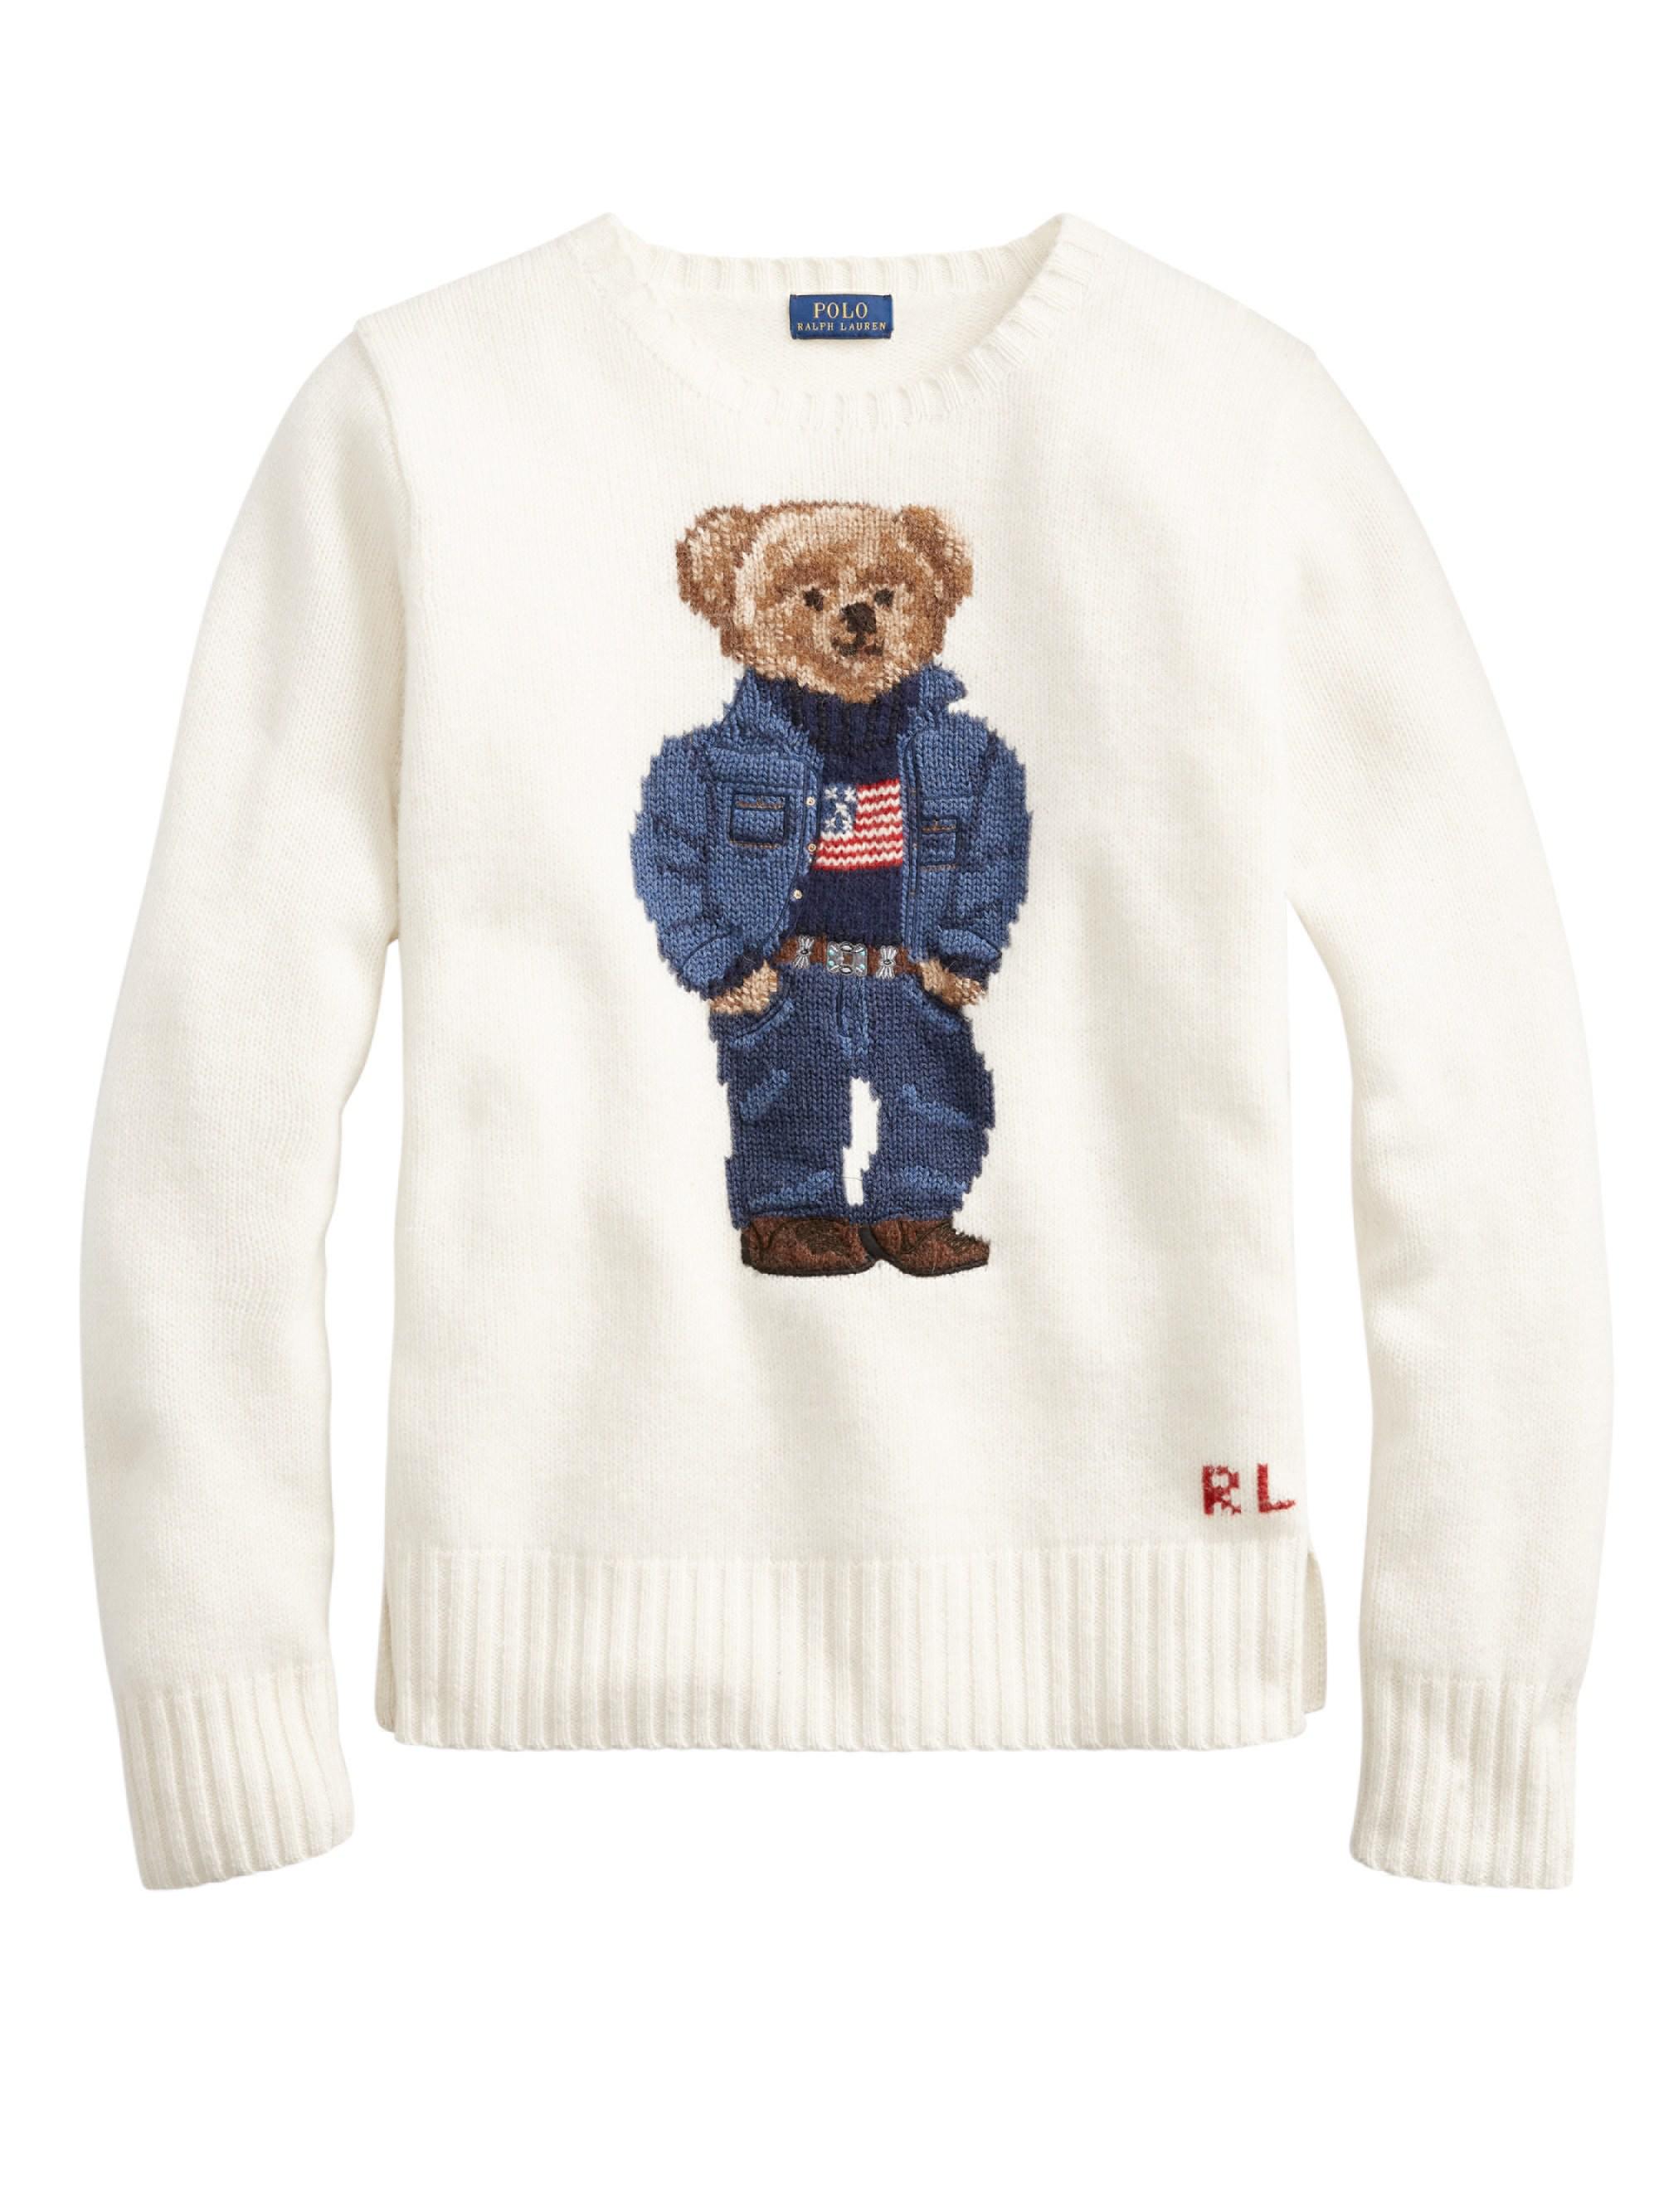 Buy > ralph lauren sweater teddy bear > in stock